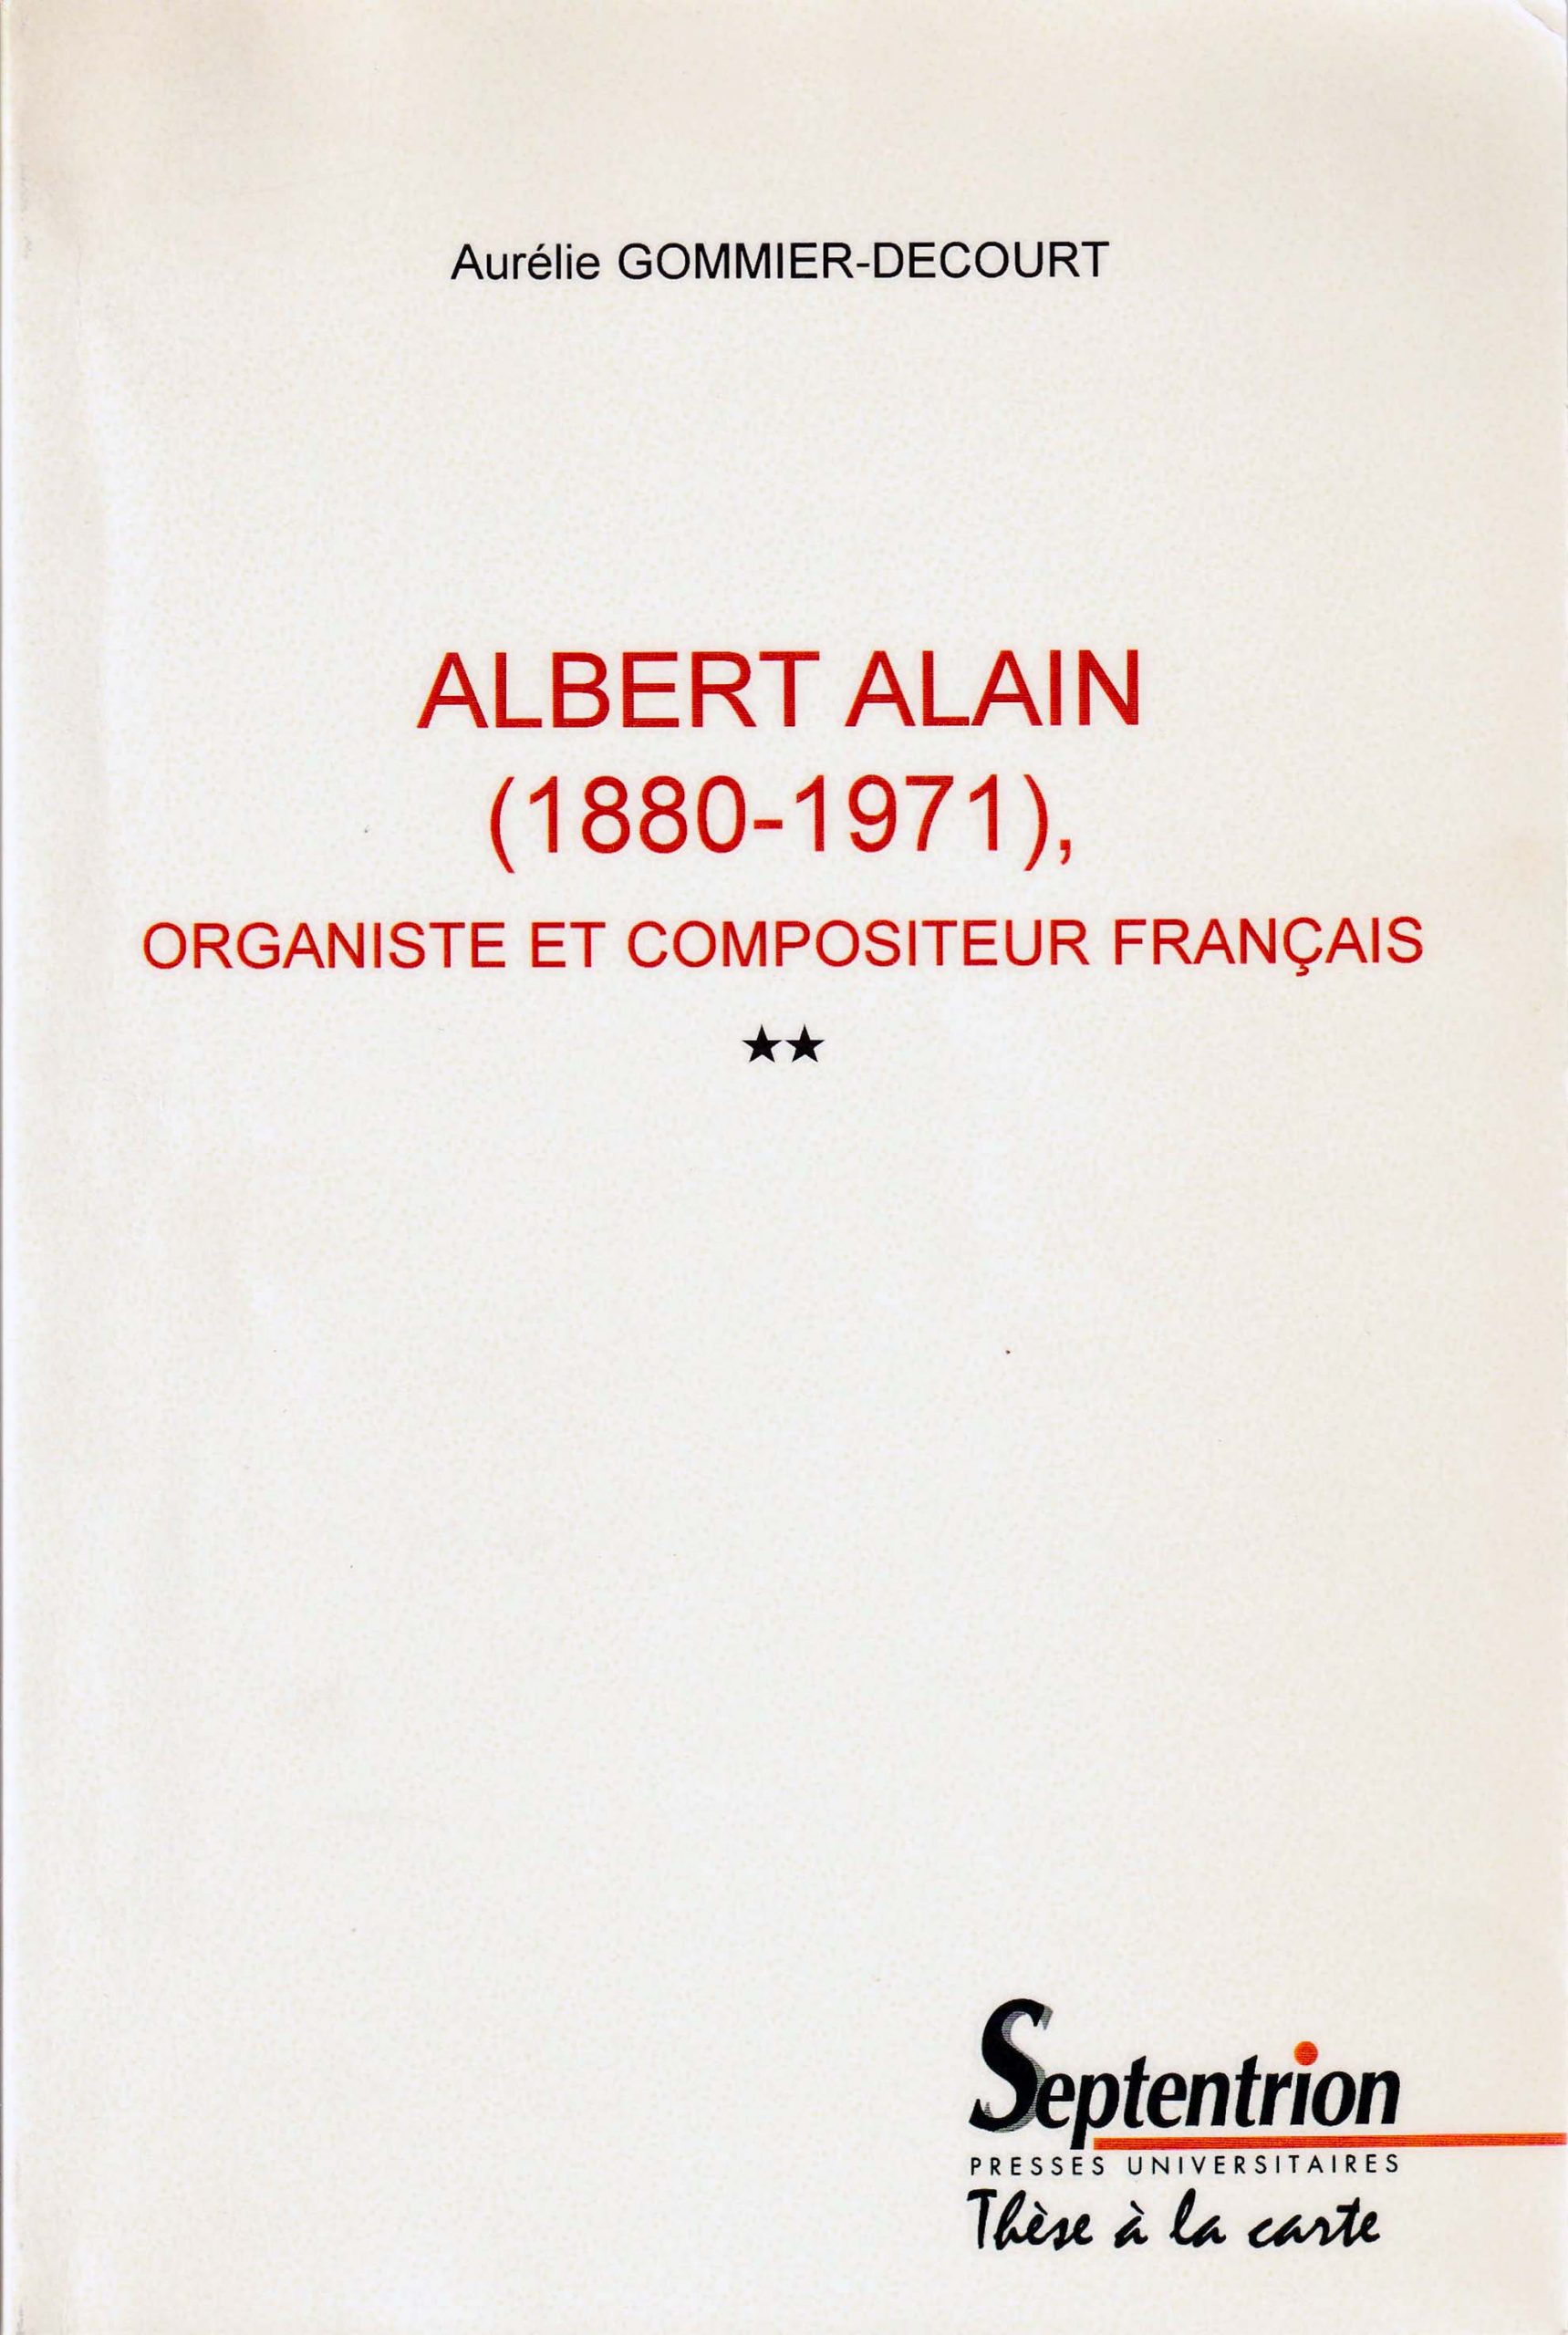 Aurelie-Gommier-Decourt-Albert-Alain-2